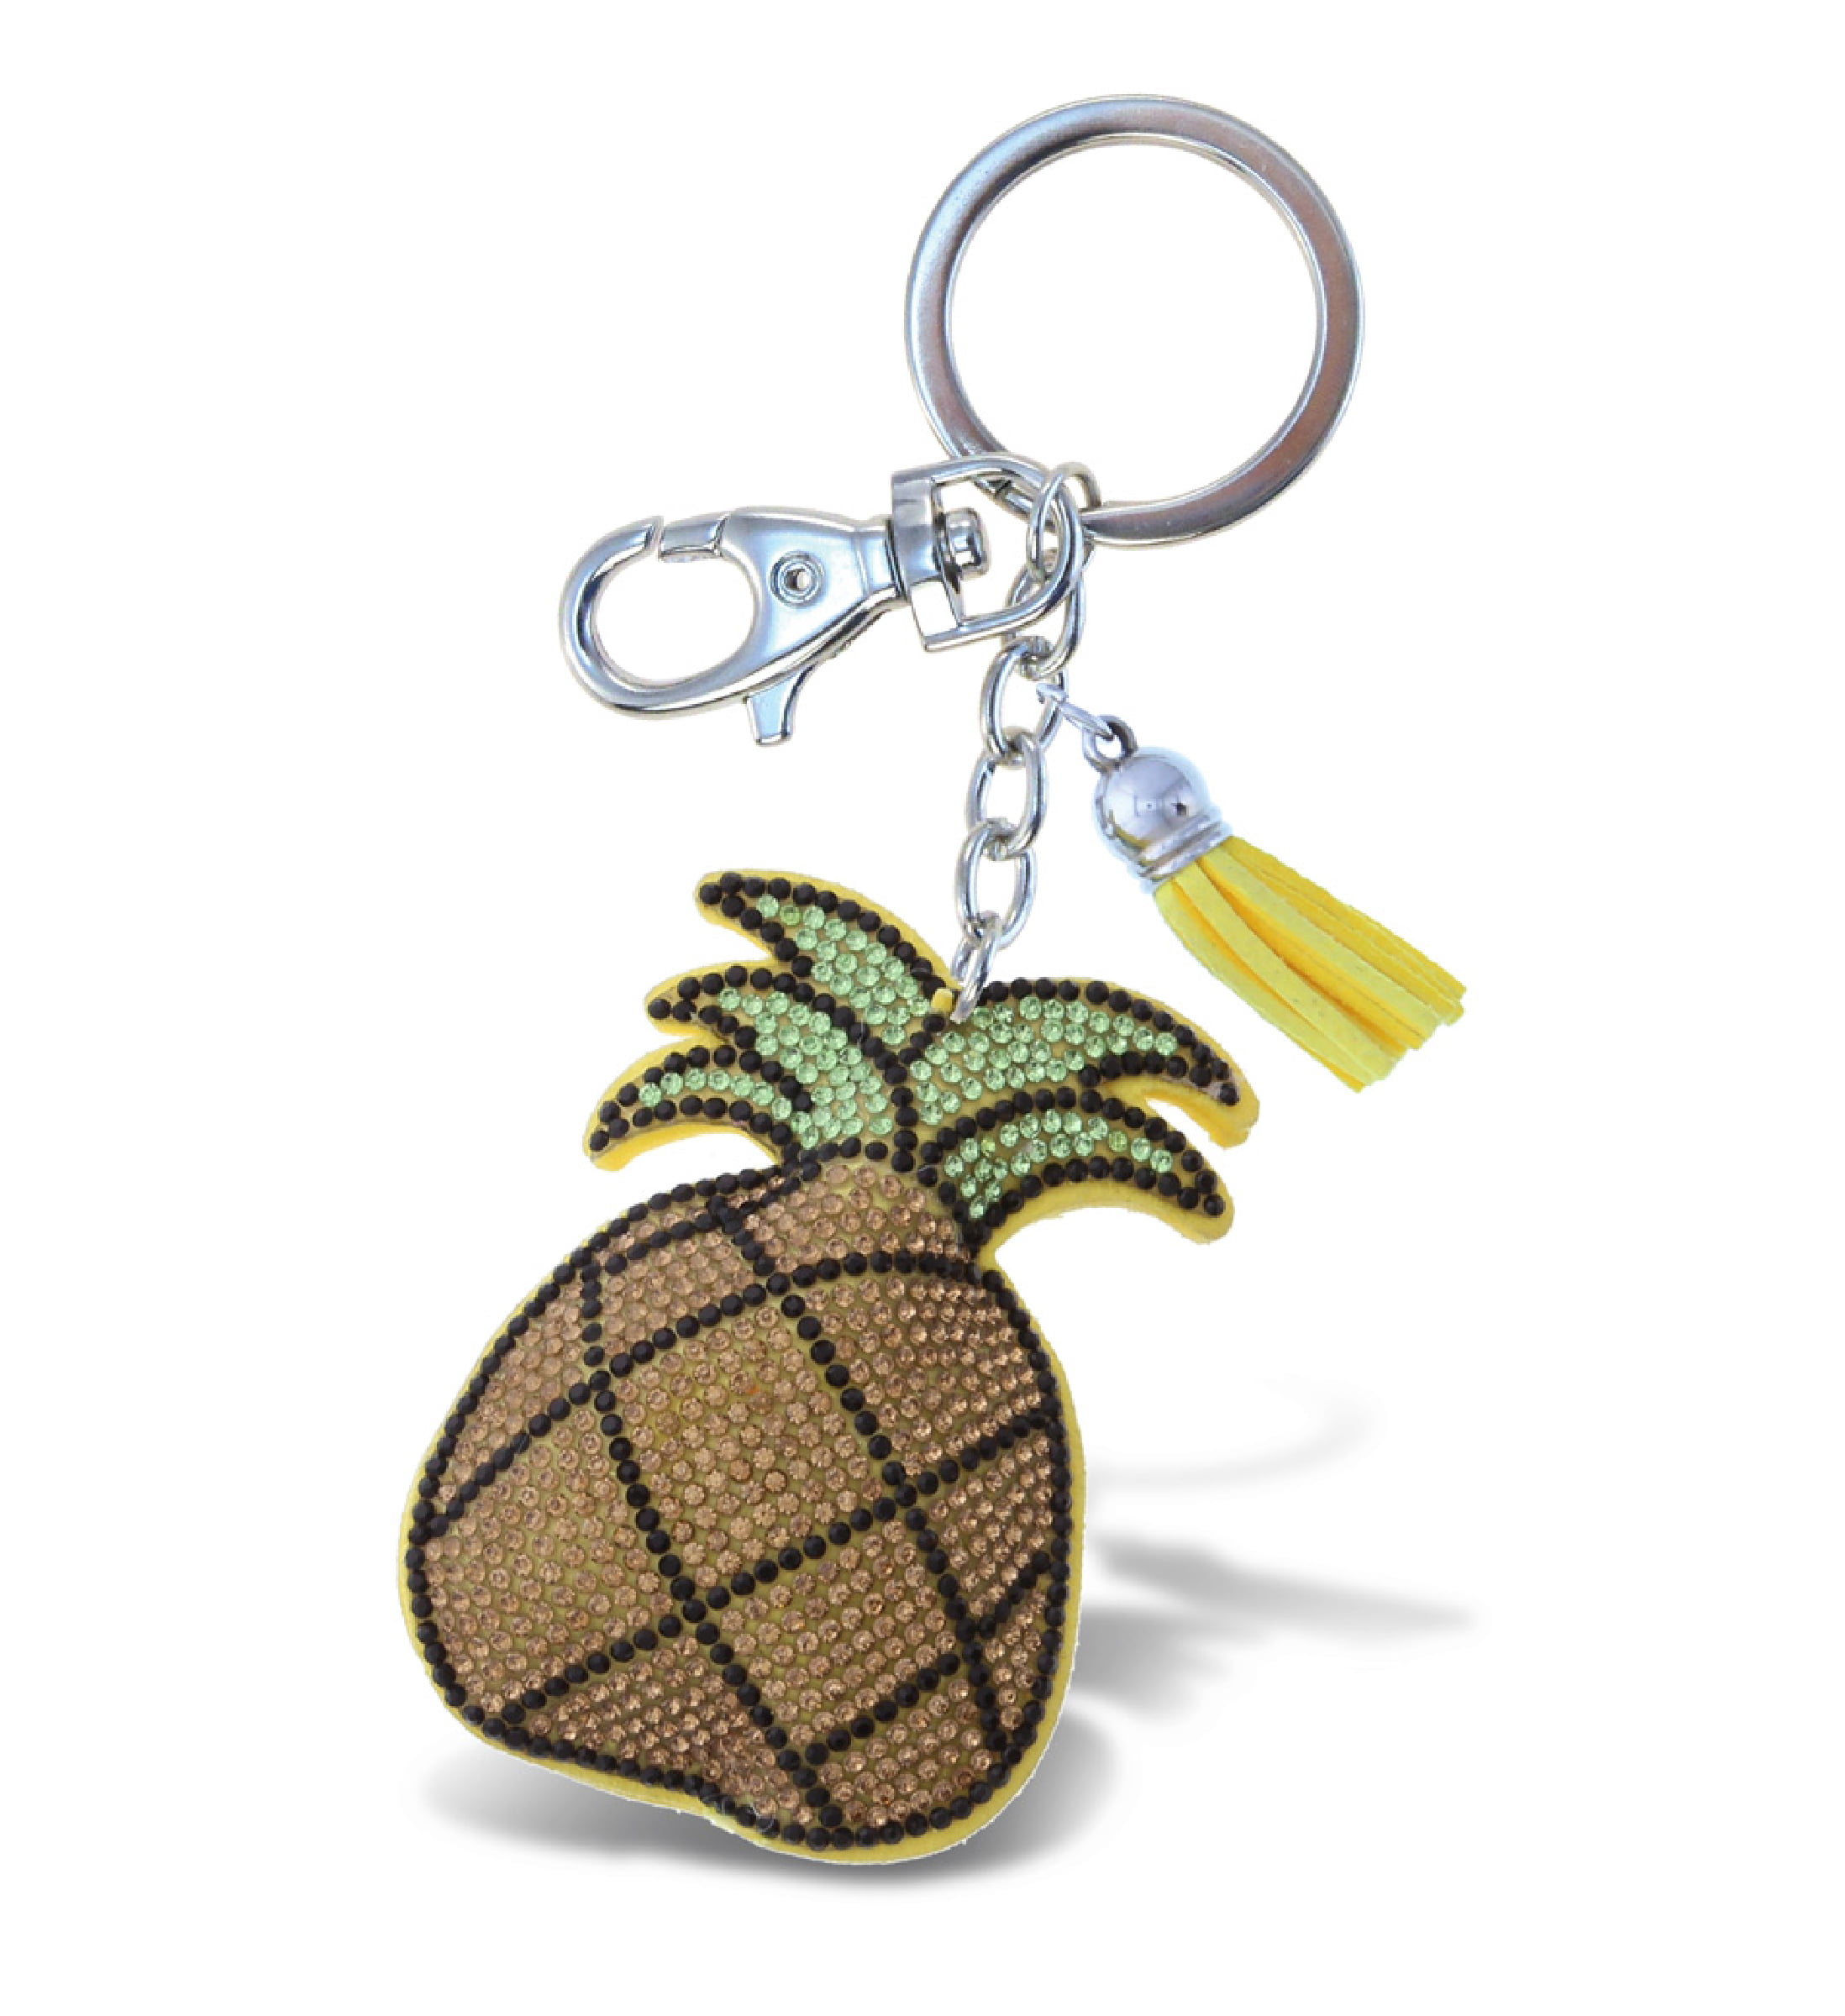 Key Wristlet Keychain Key Holder Gift for Women Tropical Pineapple Key Fob Key Accessory Bag Attachment